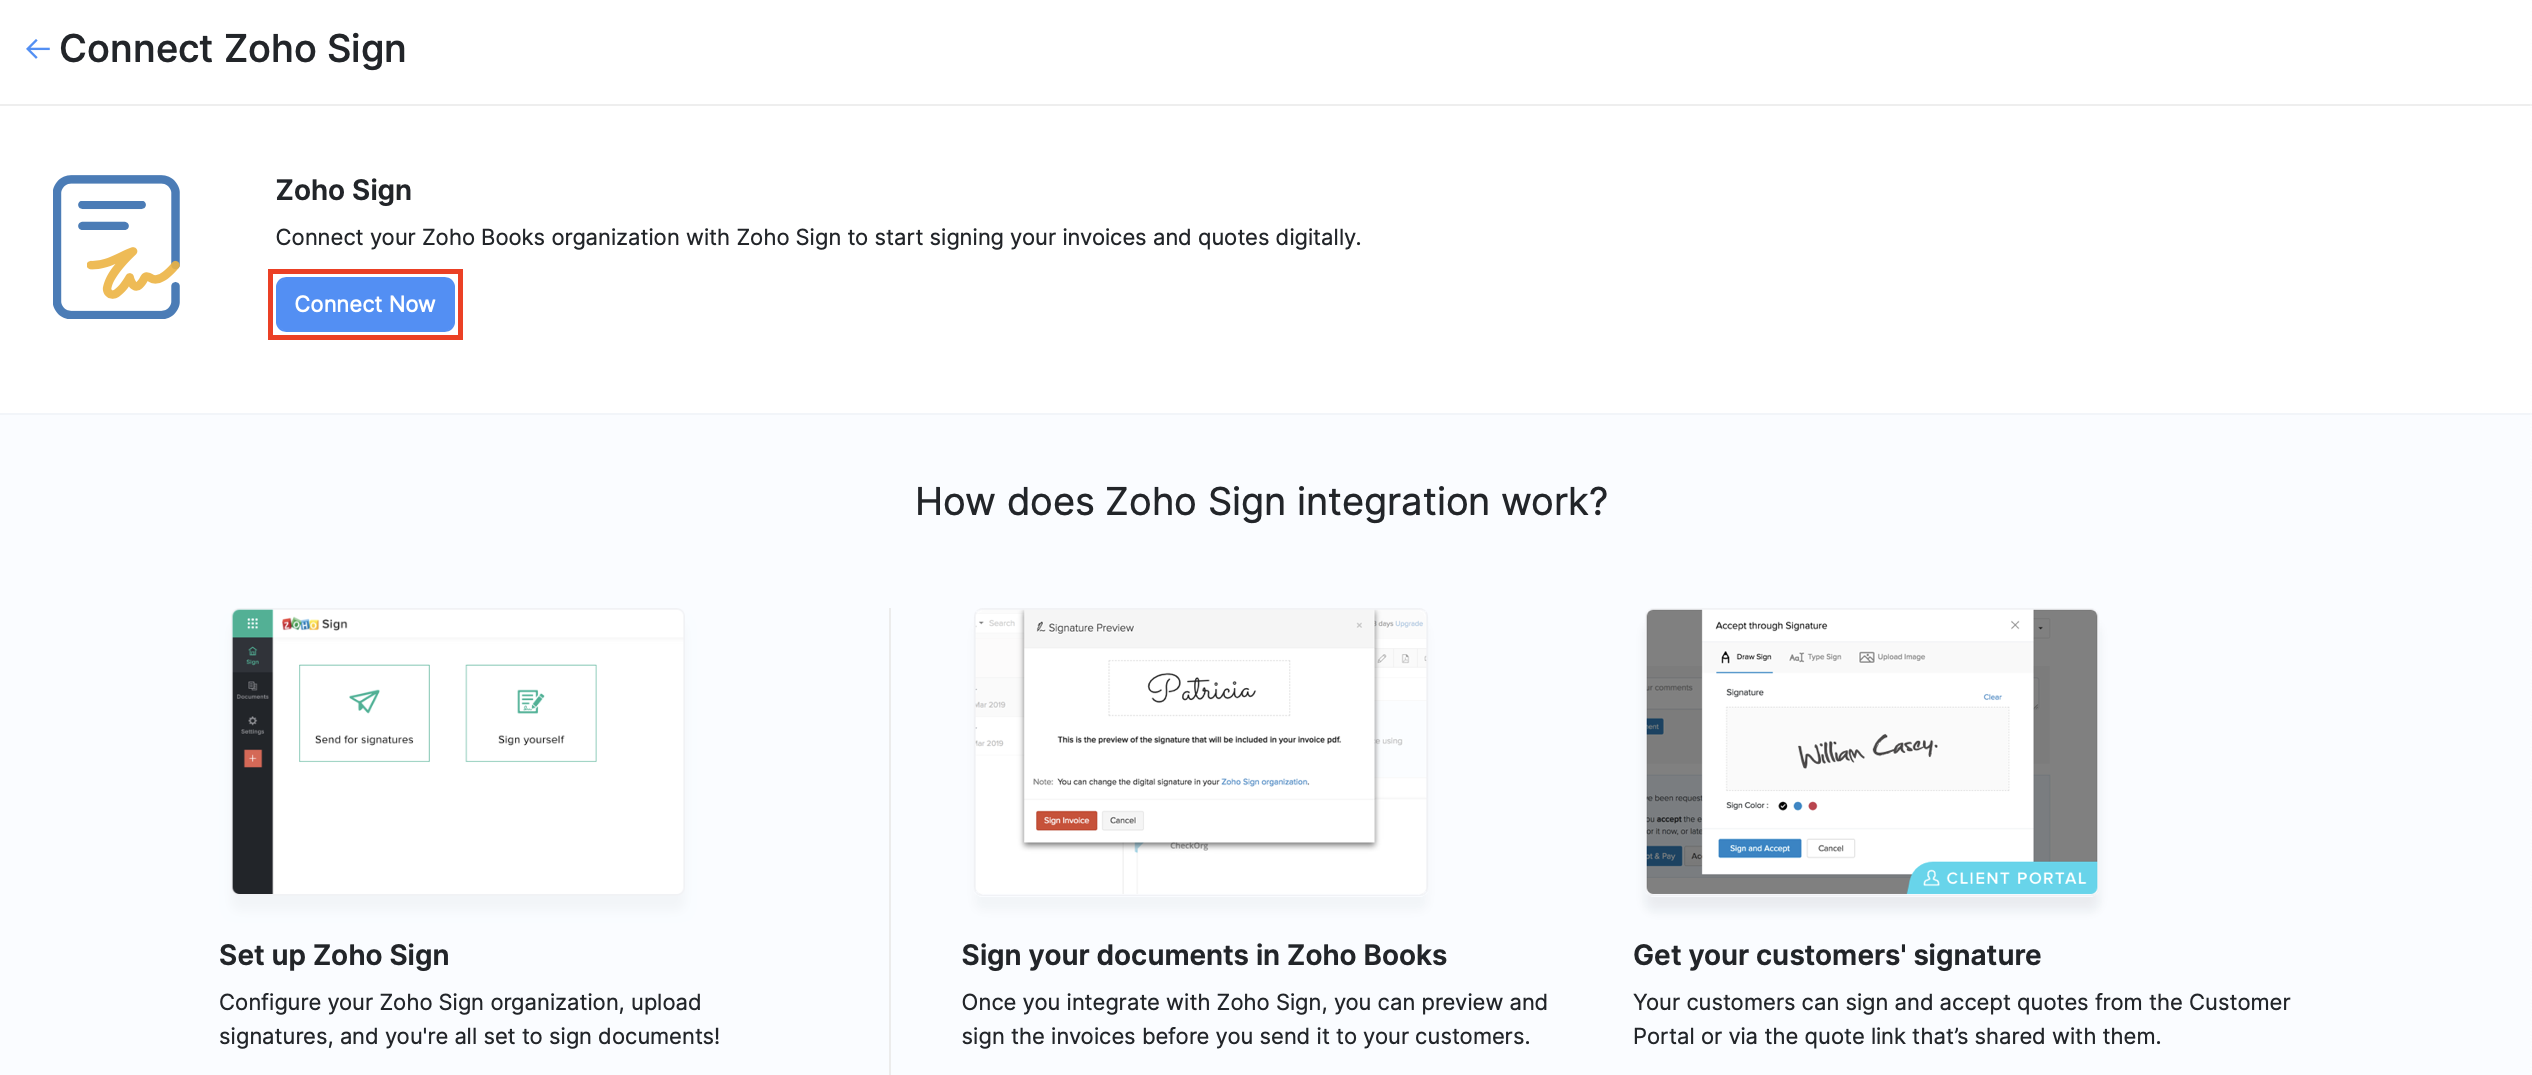 Zoho Sign Details Screen